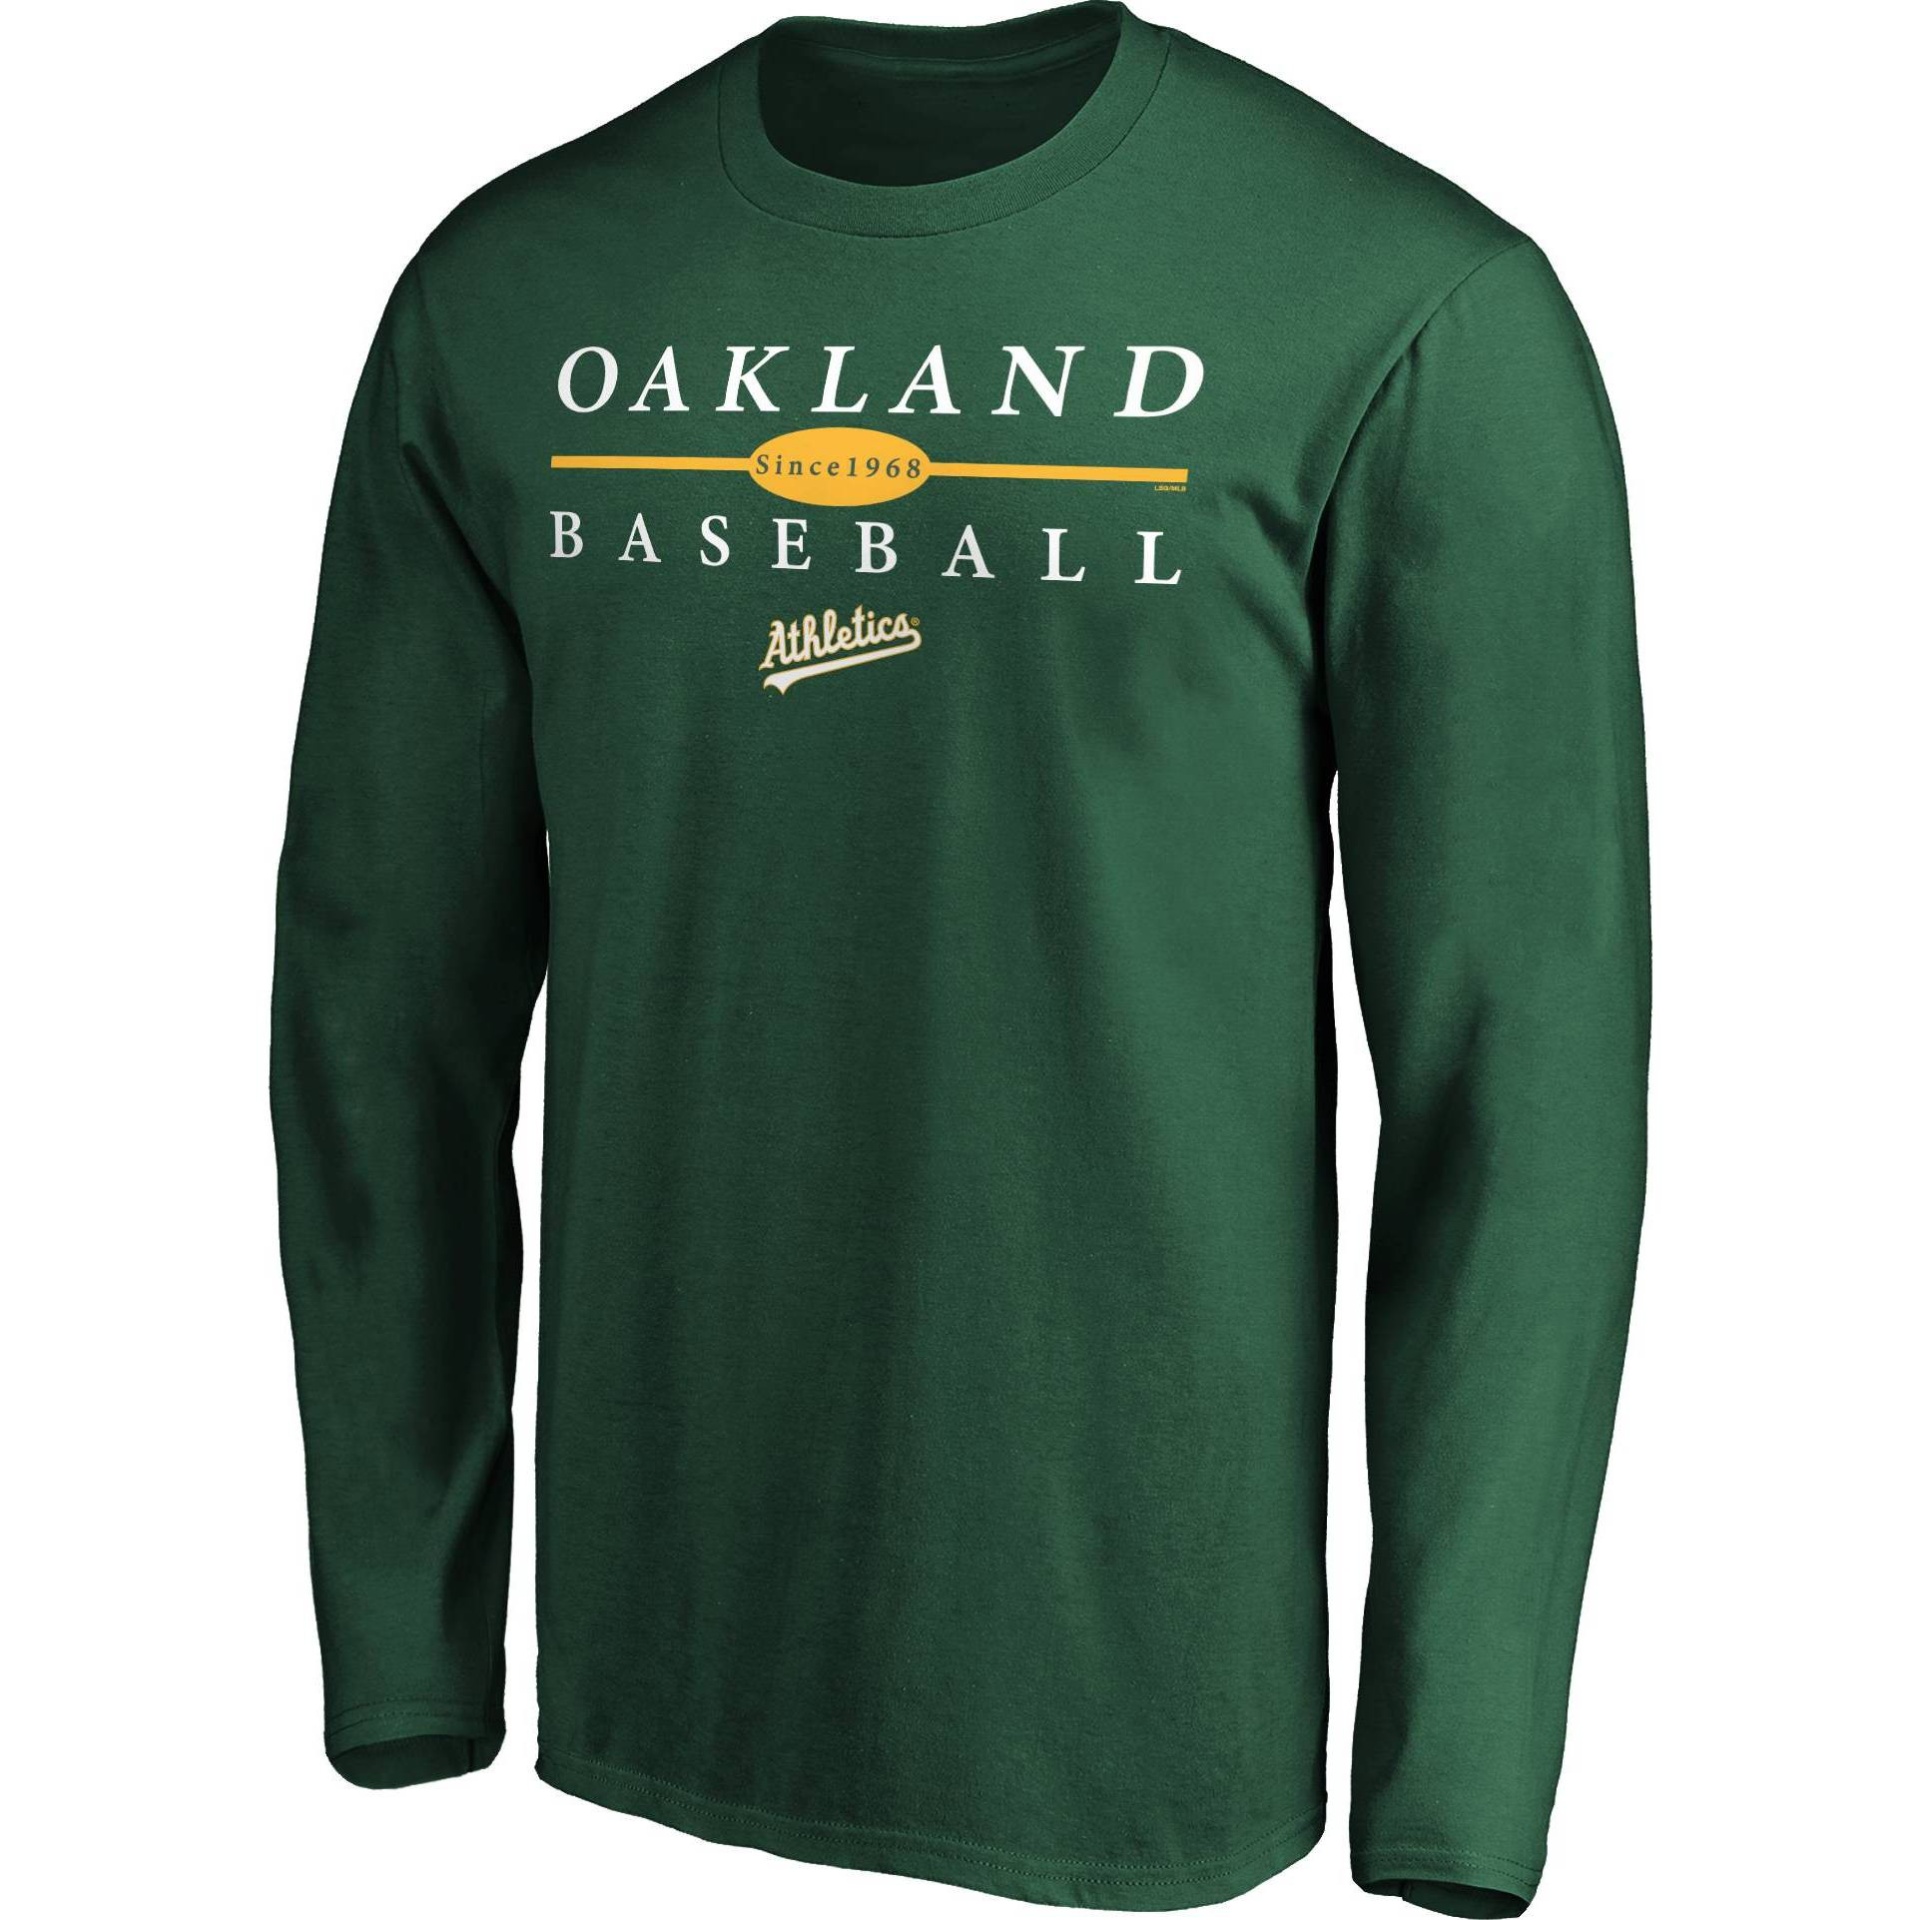 Oakland Athletics men's t-shirt - XL